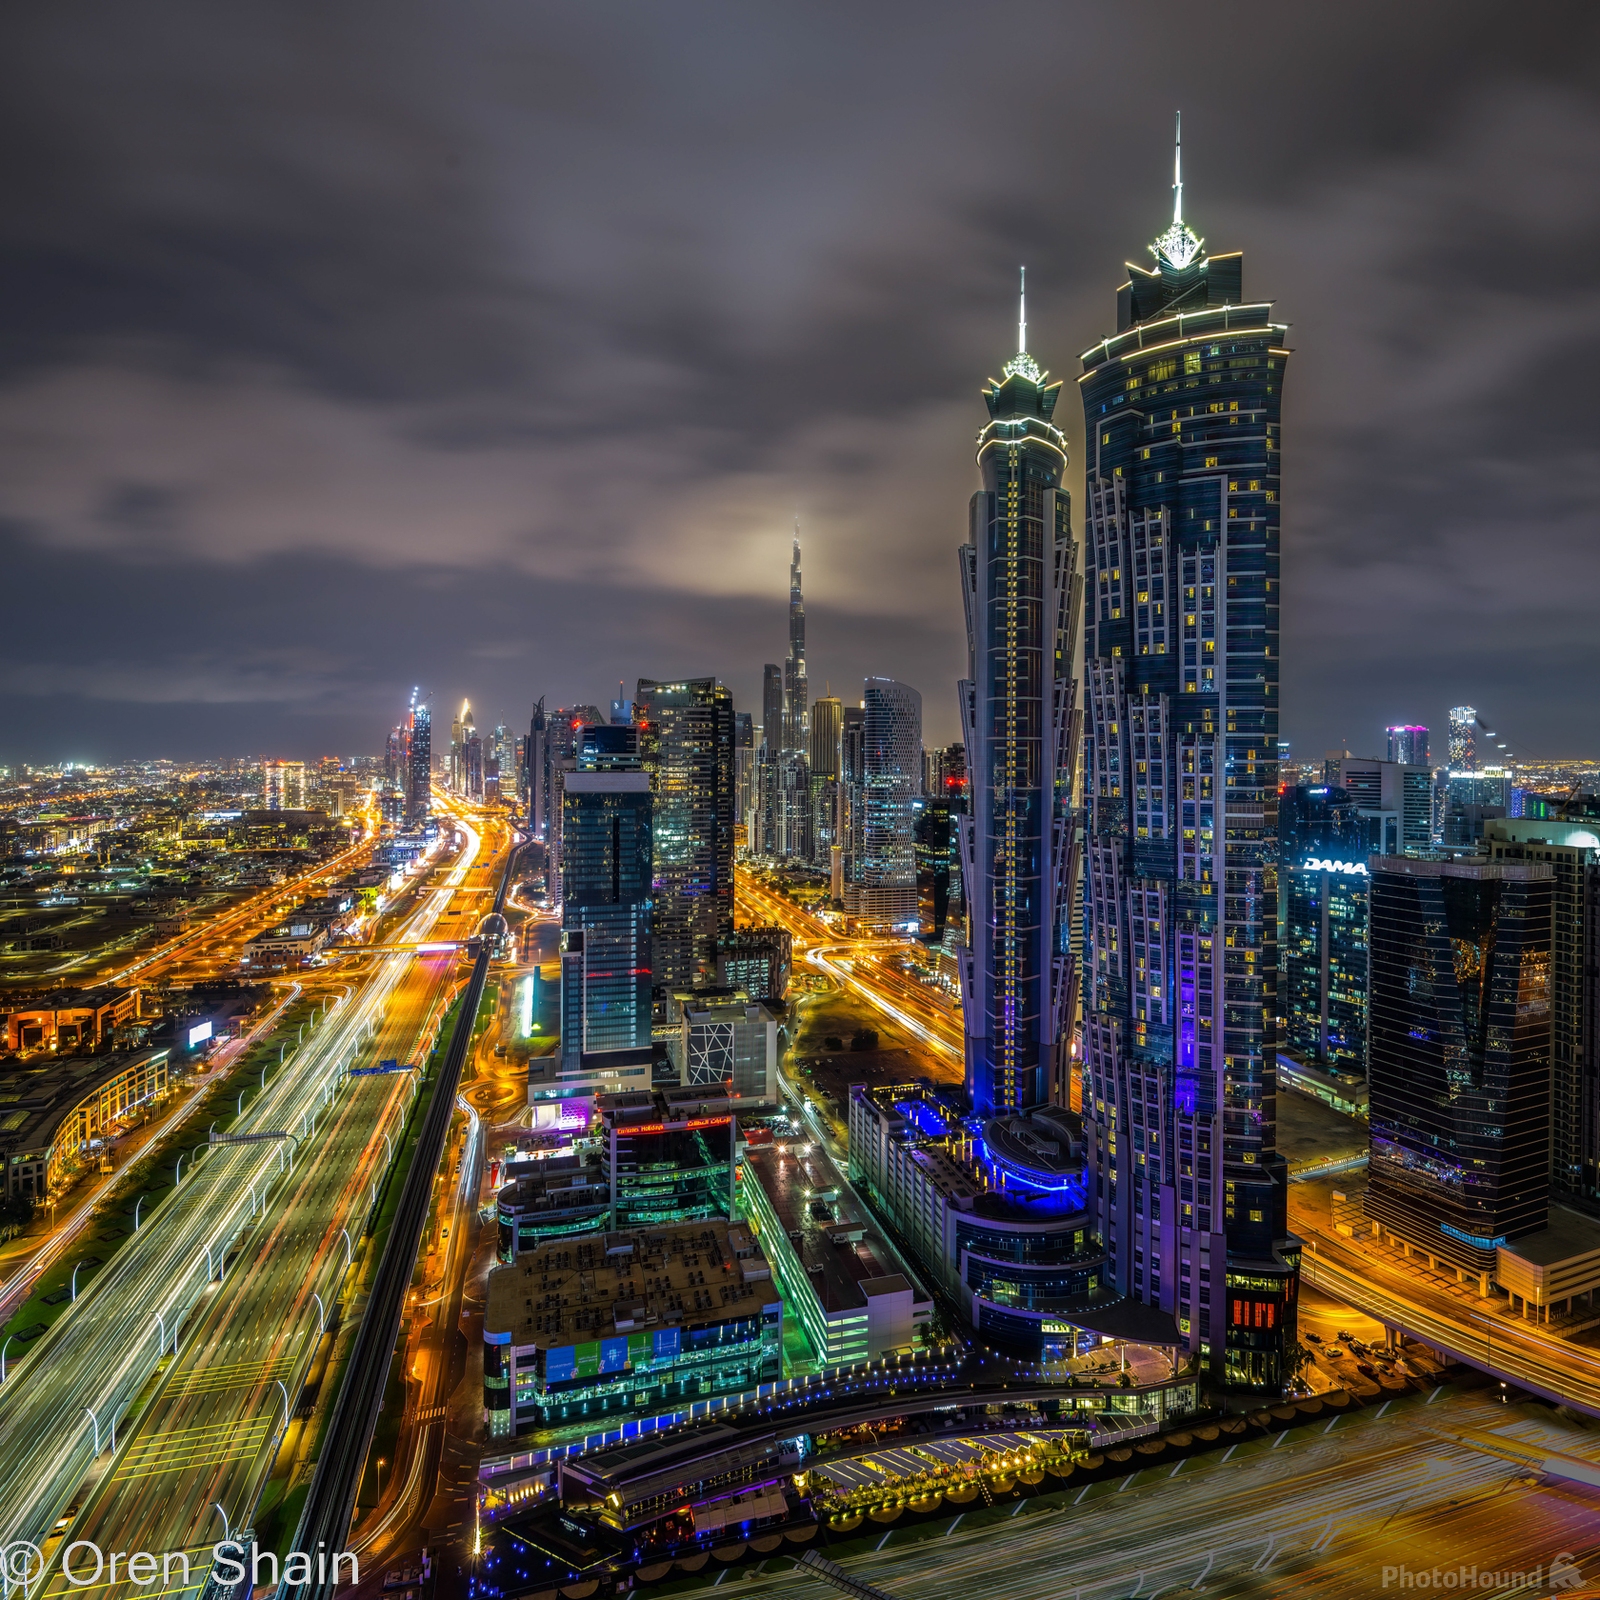 Image of Views of Dubai from Babiole Restaurant by oren shain